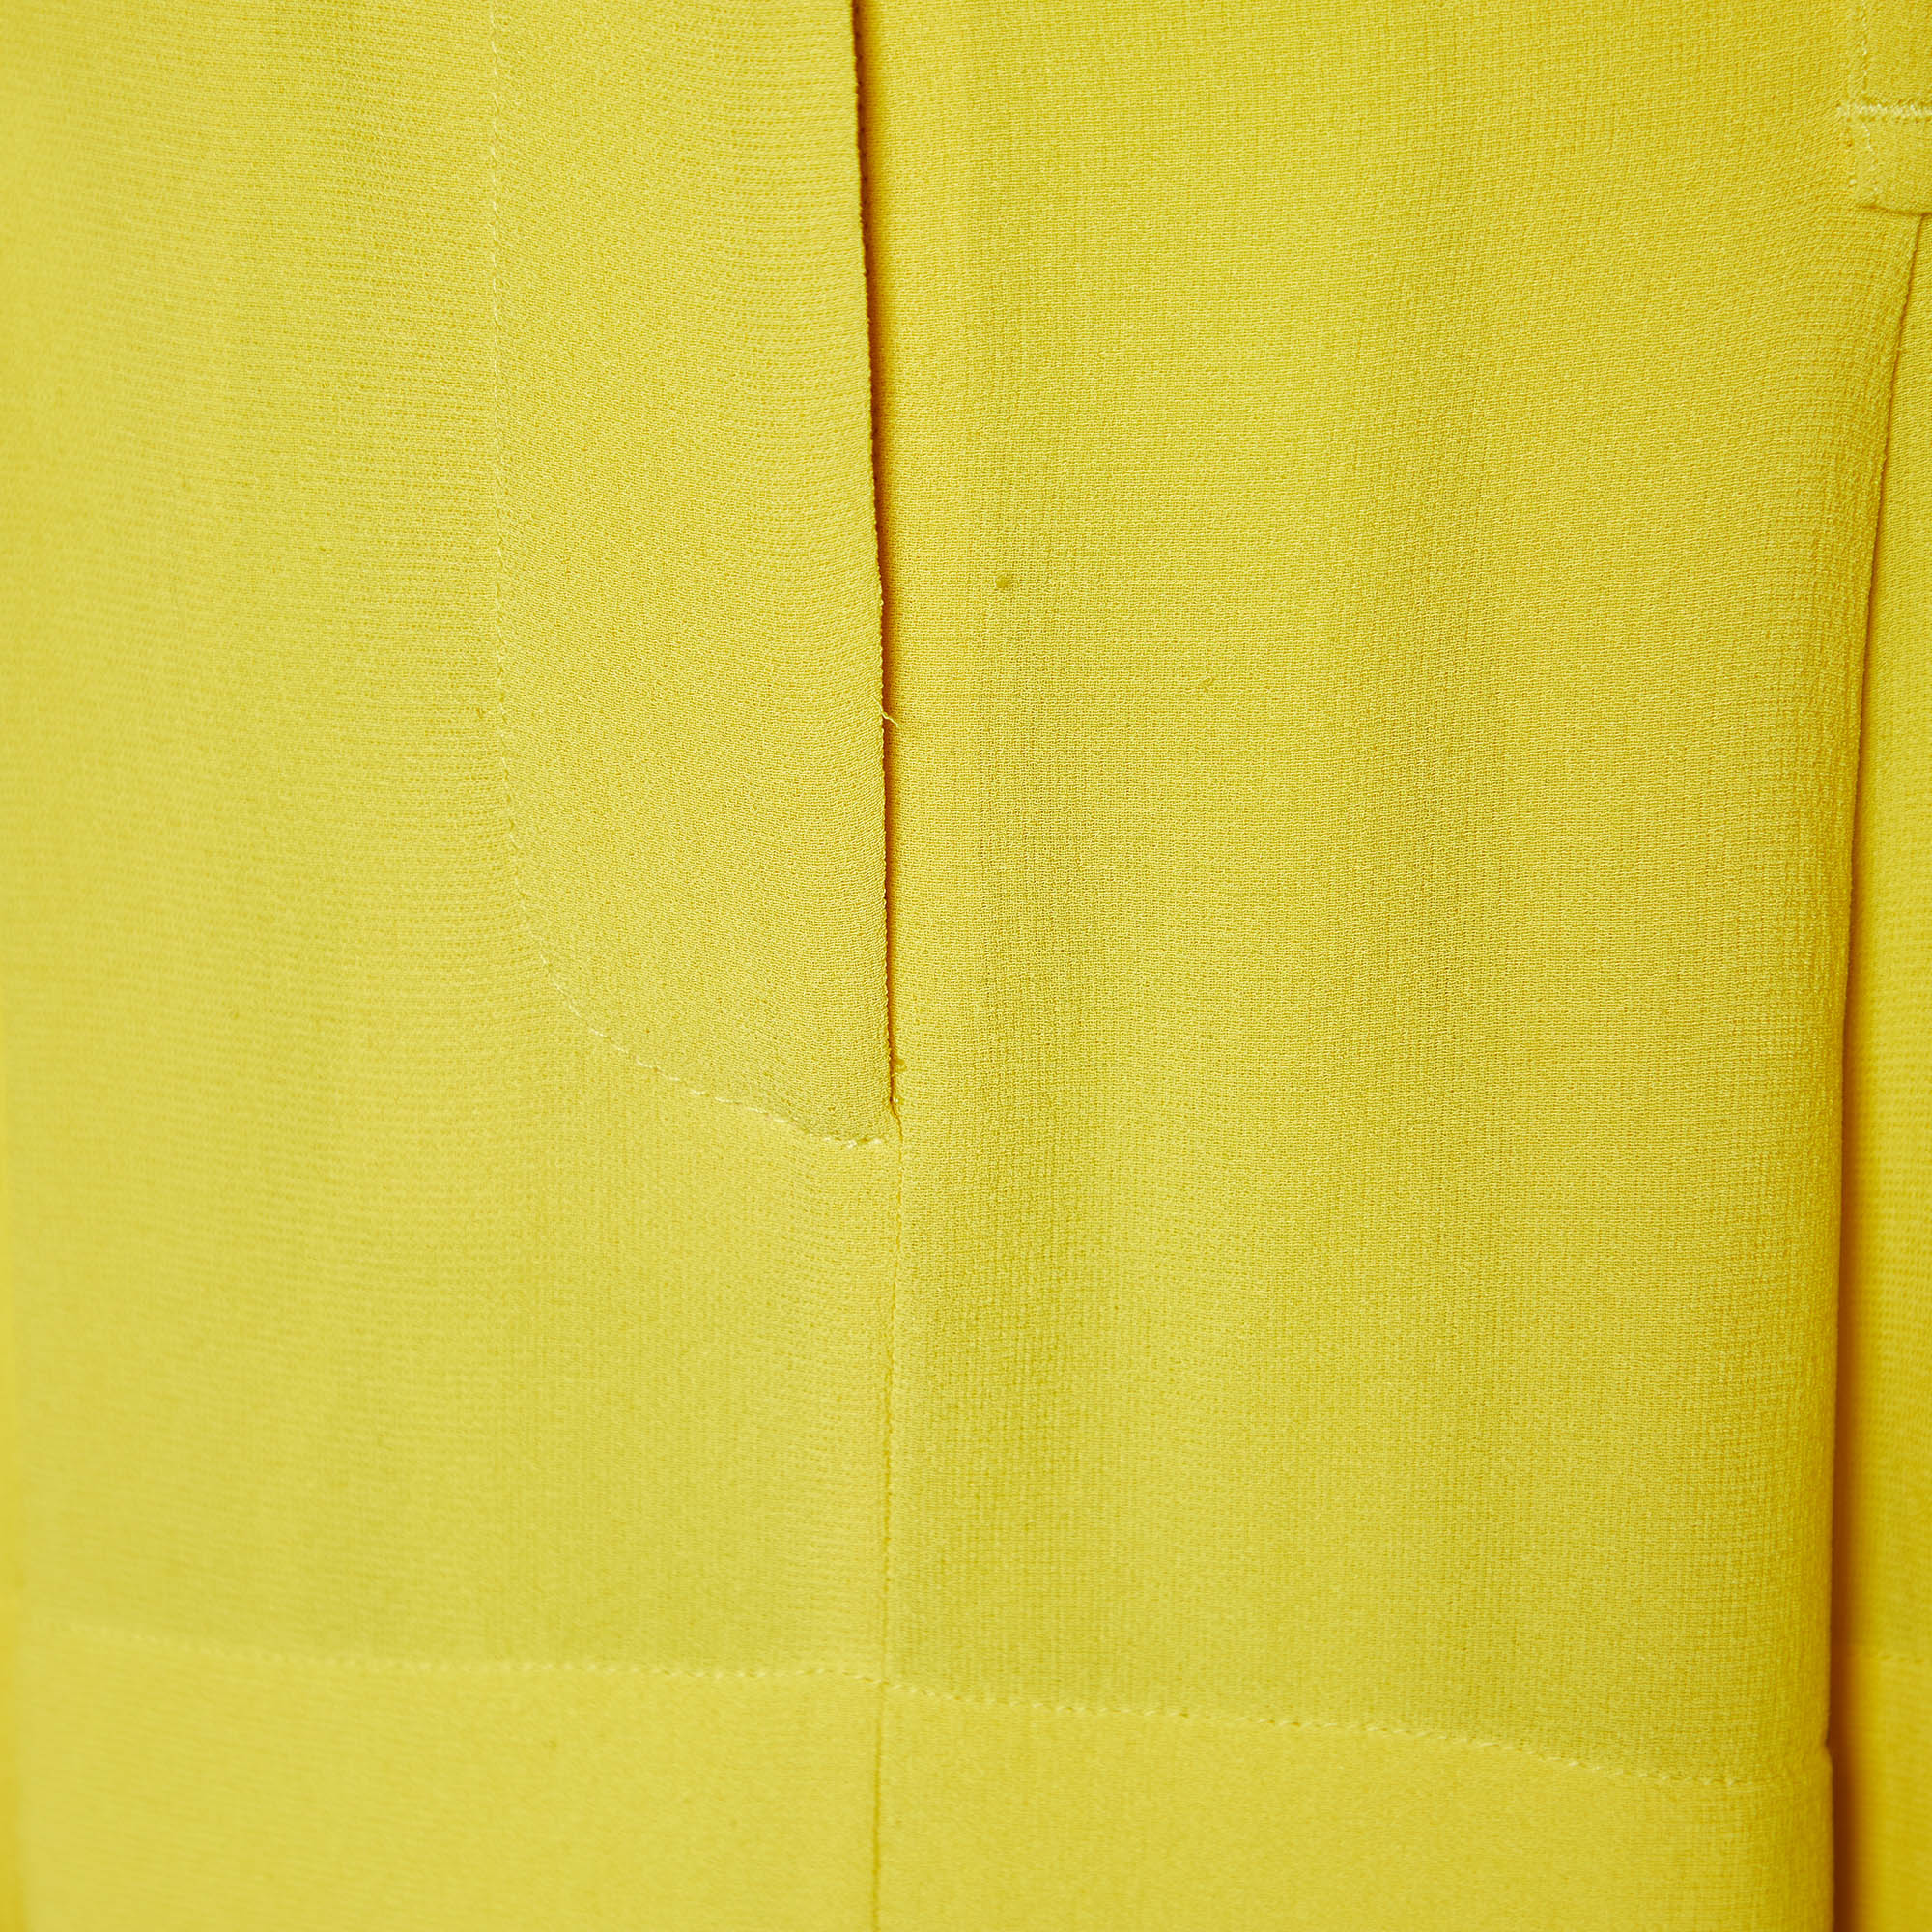 Balenciaga Yellow Silk Tiered Mini Skirt M